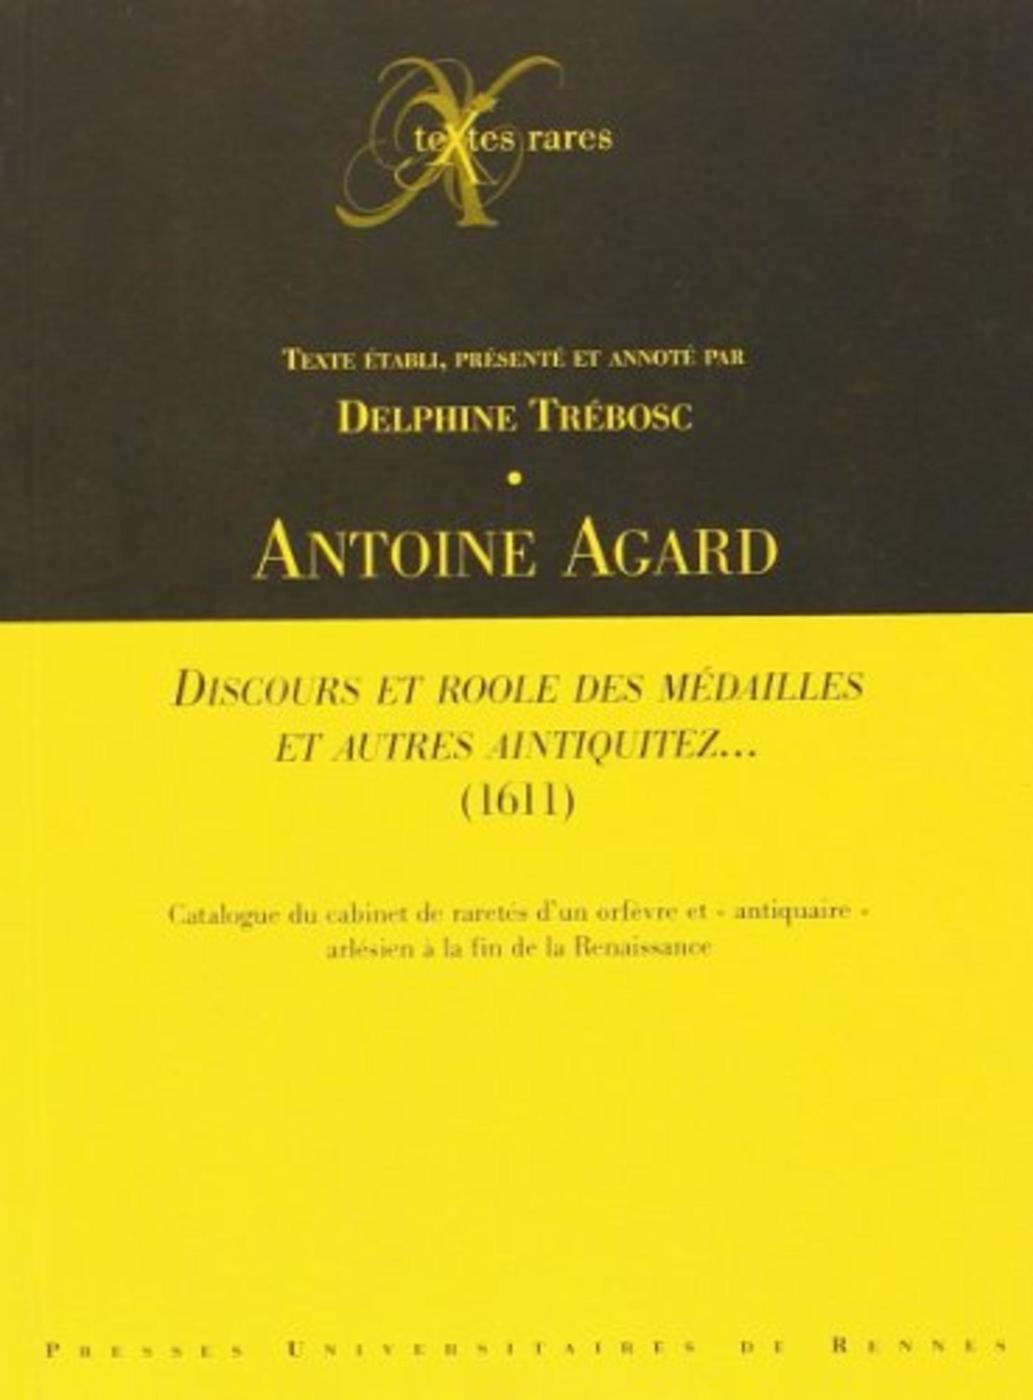 CABINET DE RARETES D ANTOINE AGARD (9782753504707-front-cover)